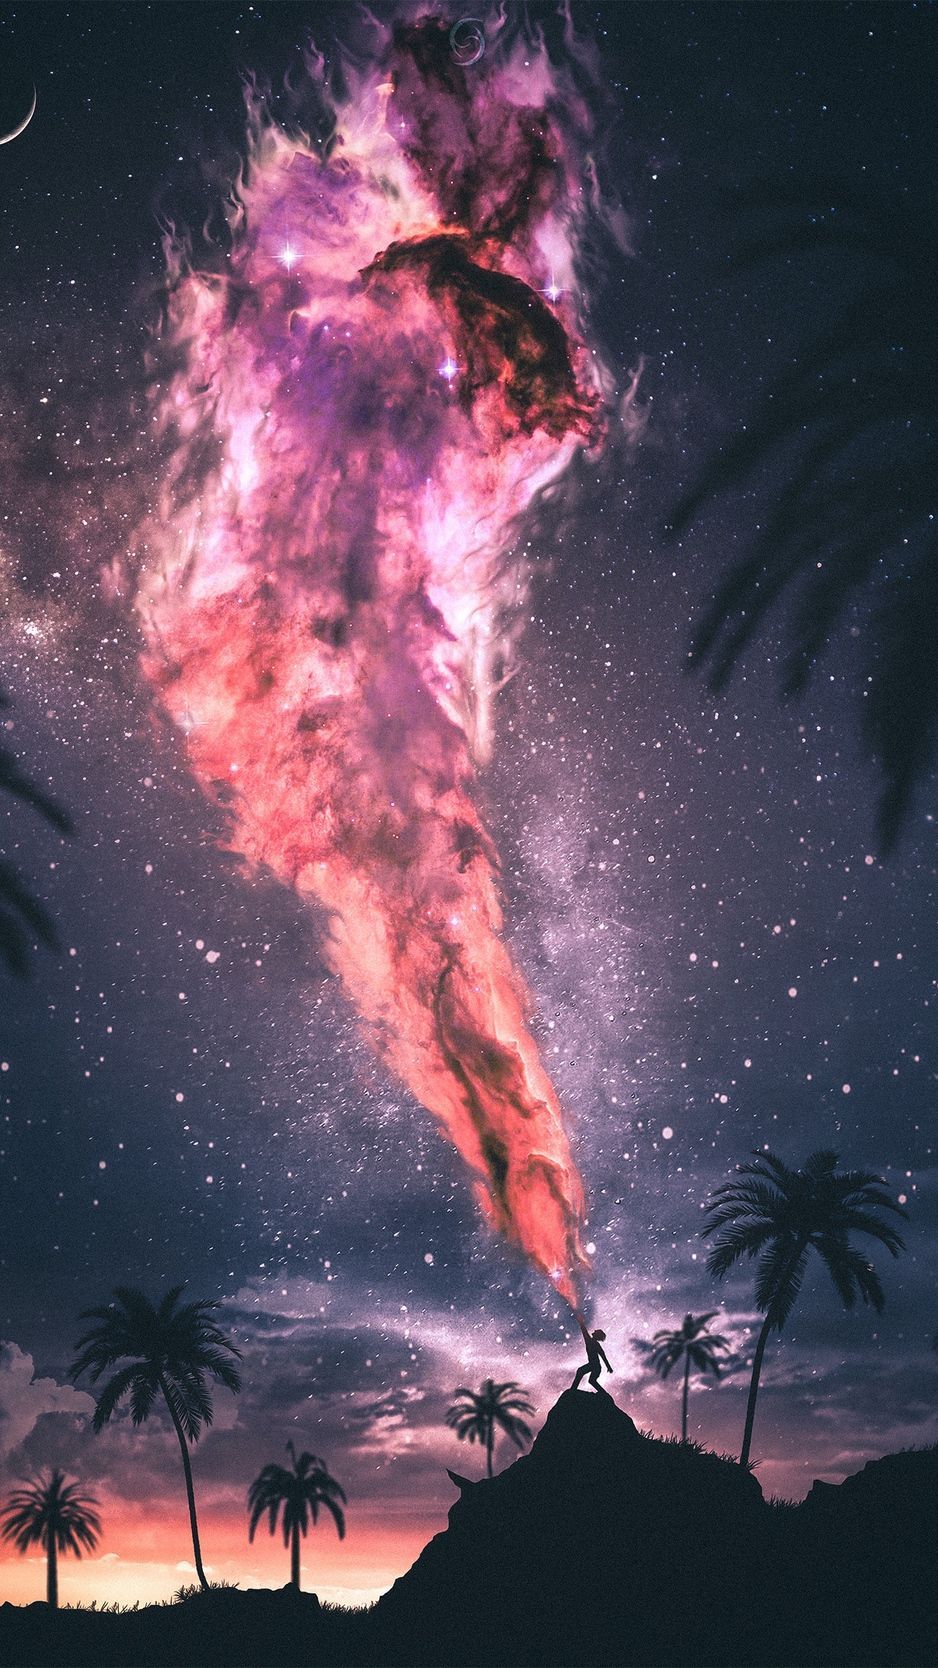 Aesthetic phone wallpaper of a pink and purple nebula - Magic